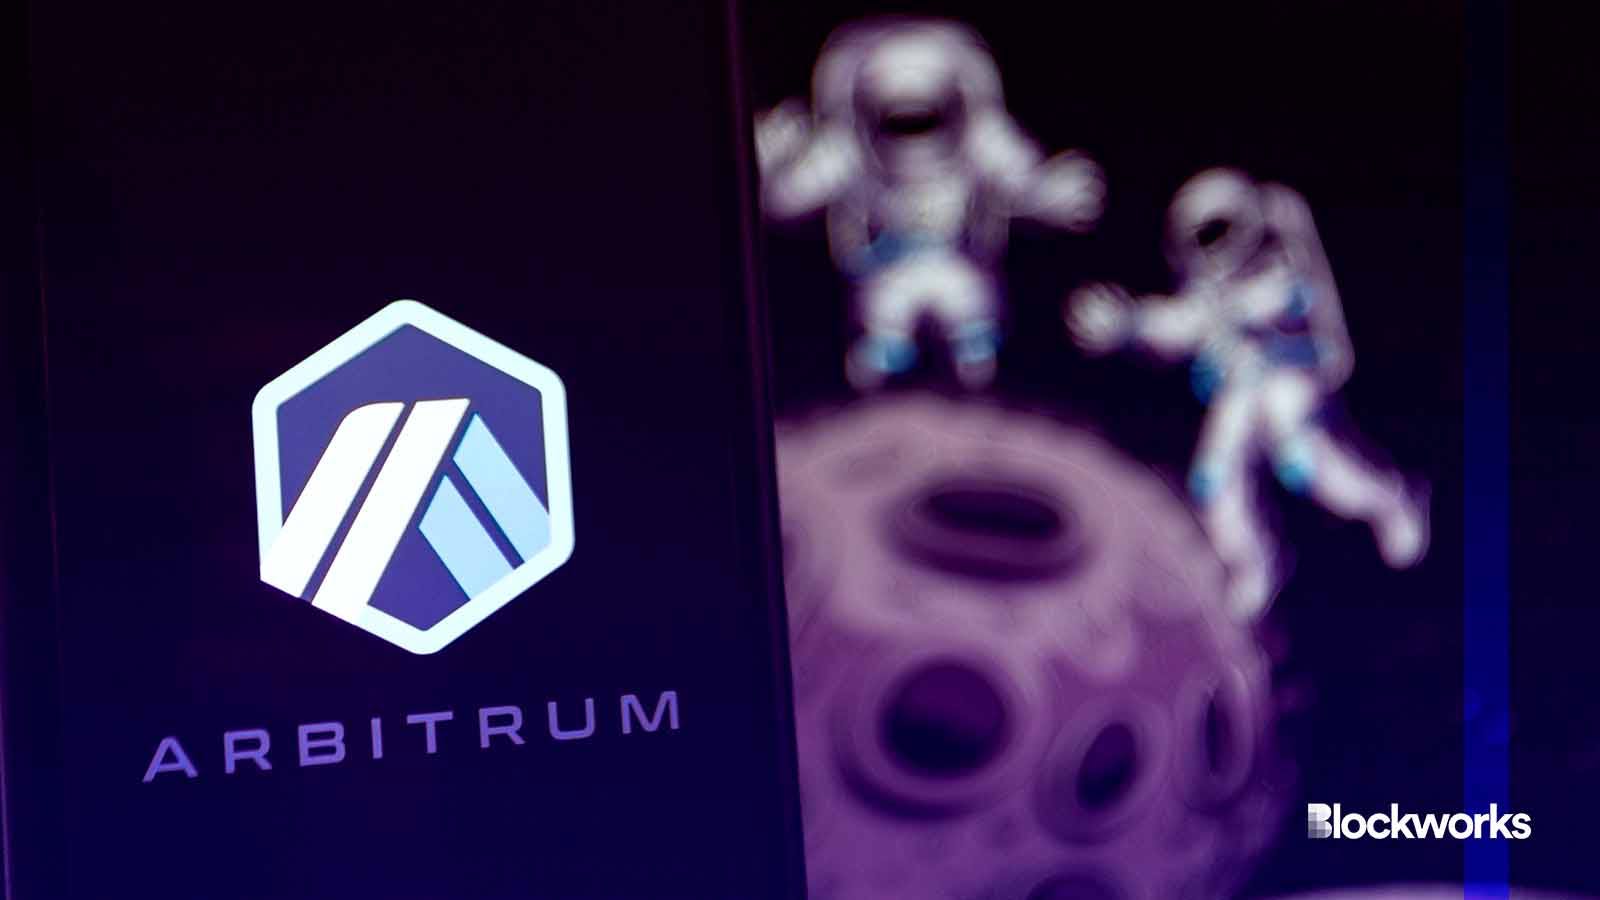 Arbitrum Orbit prepped for mainnet launch